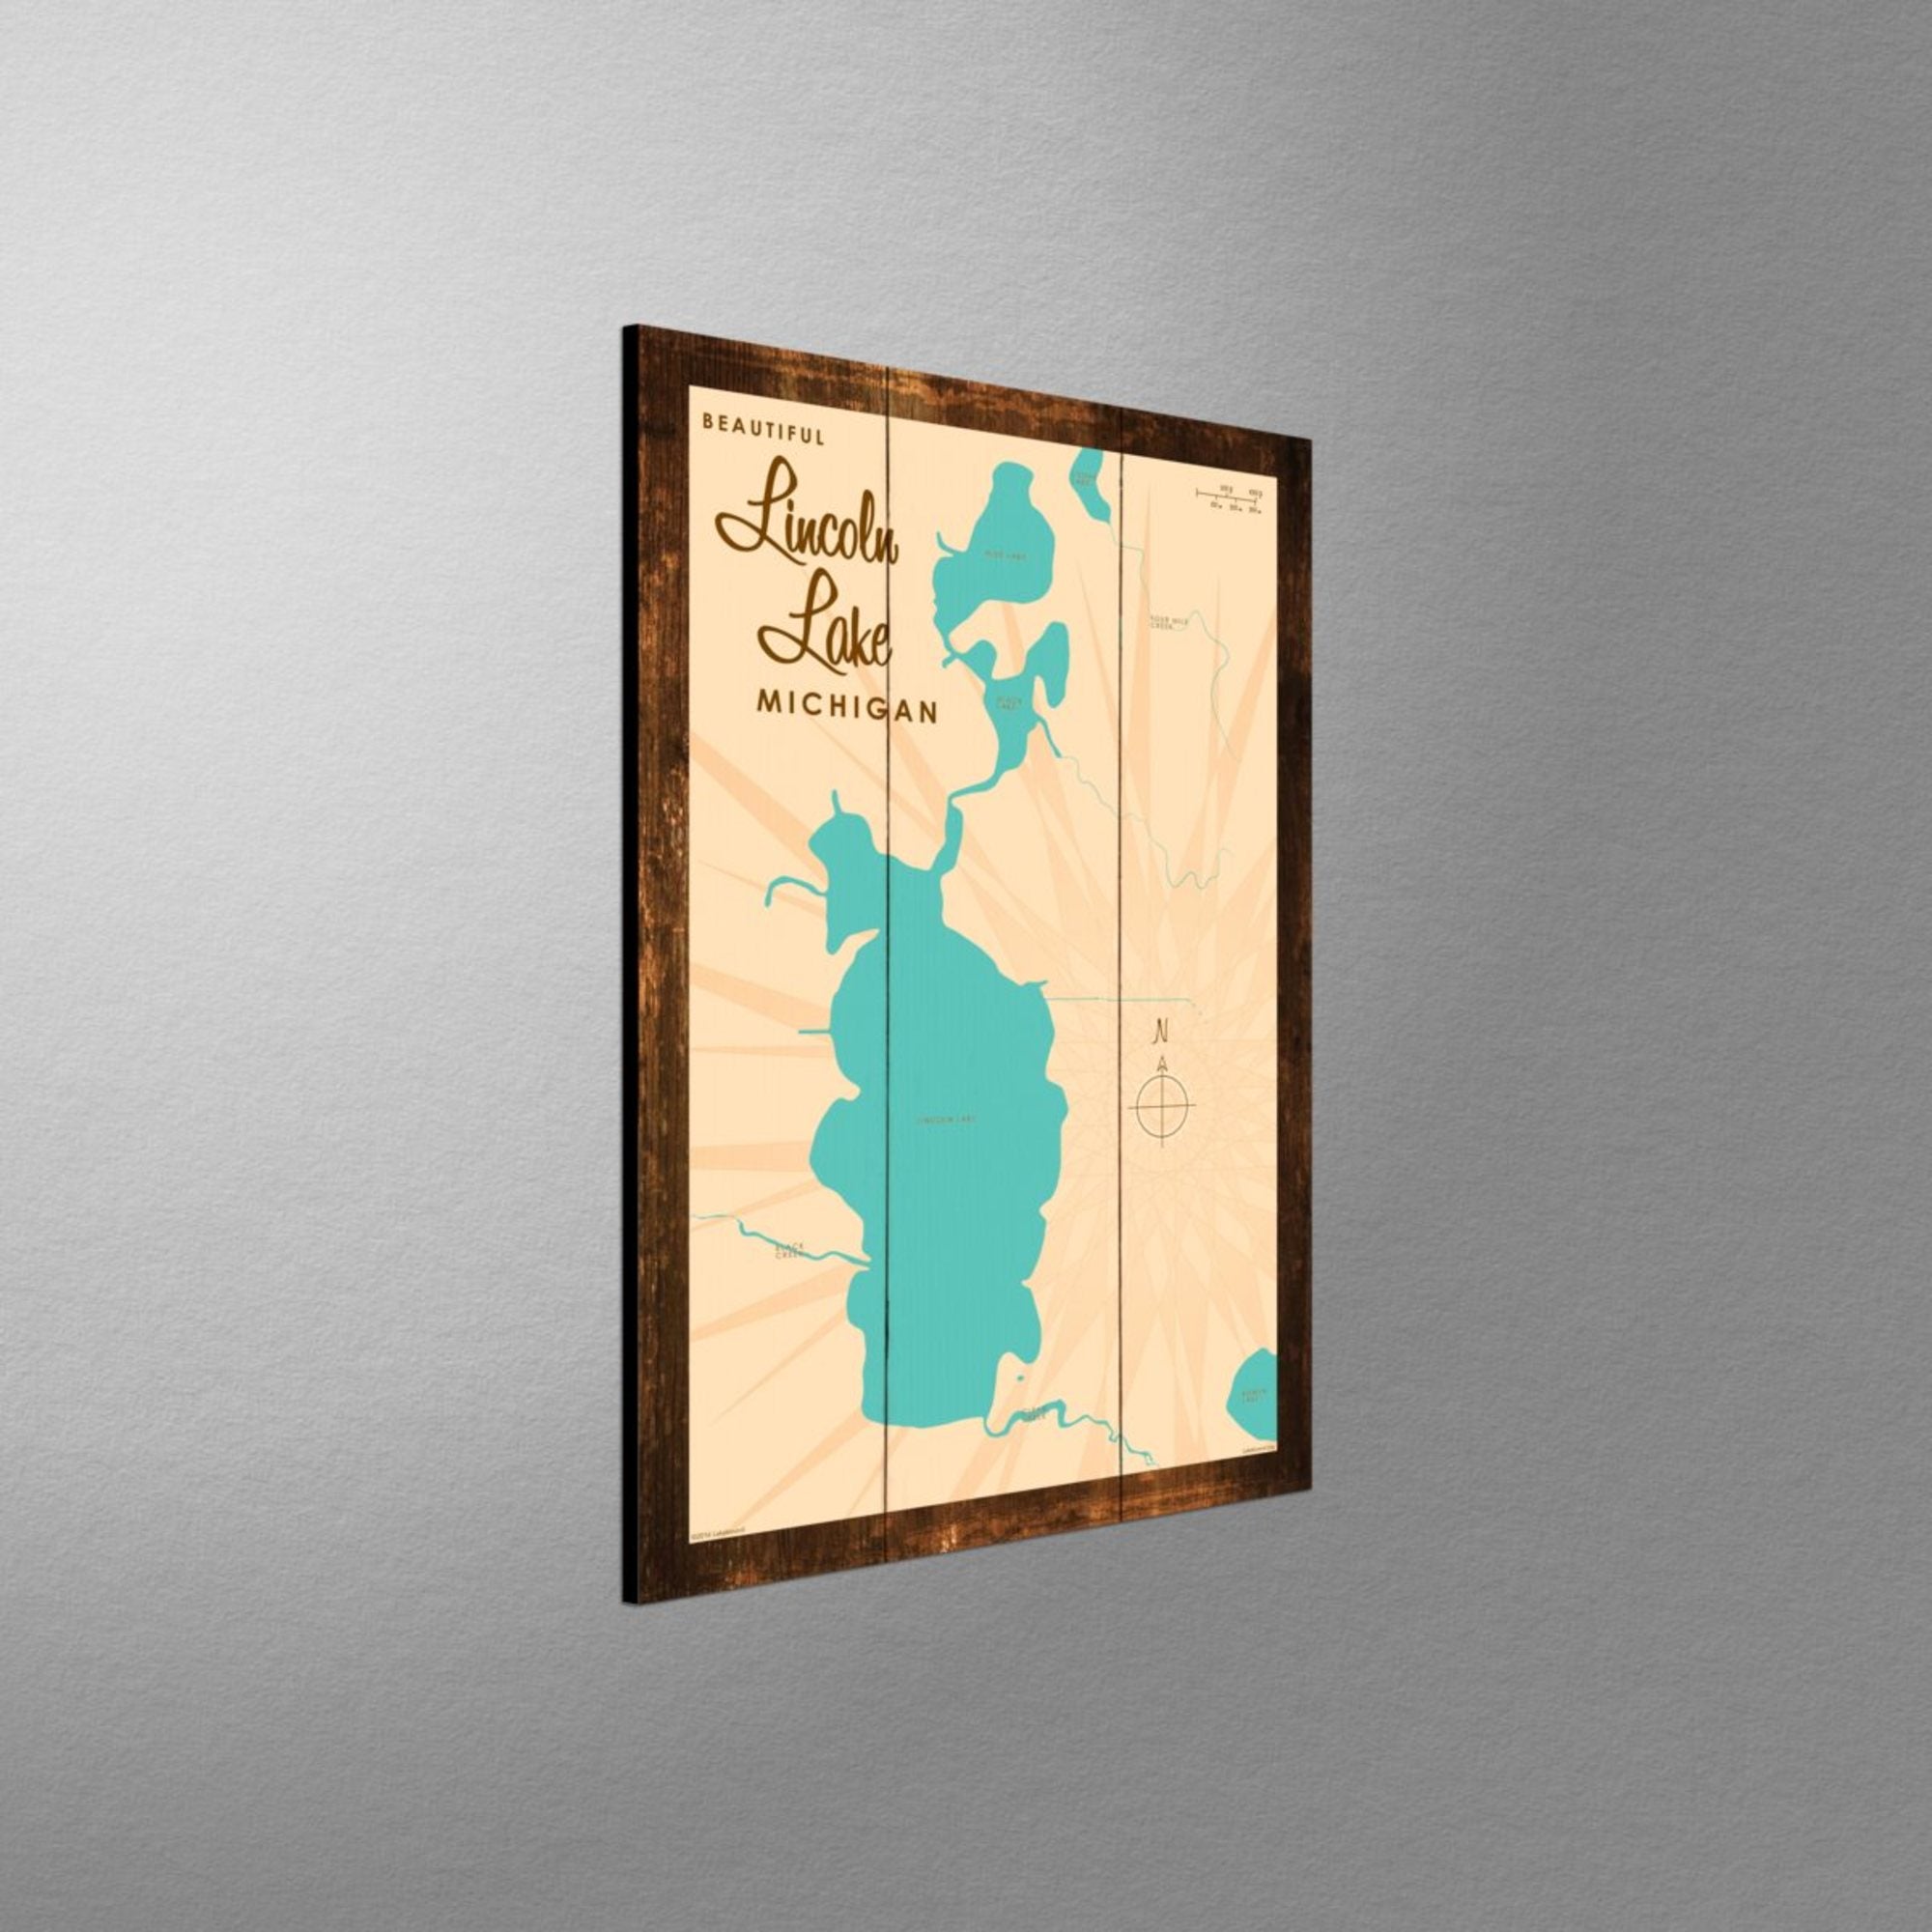 Lincoln Lake Michigan, Rustic Wood Sign Map Art